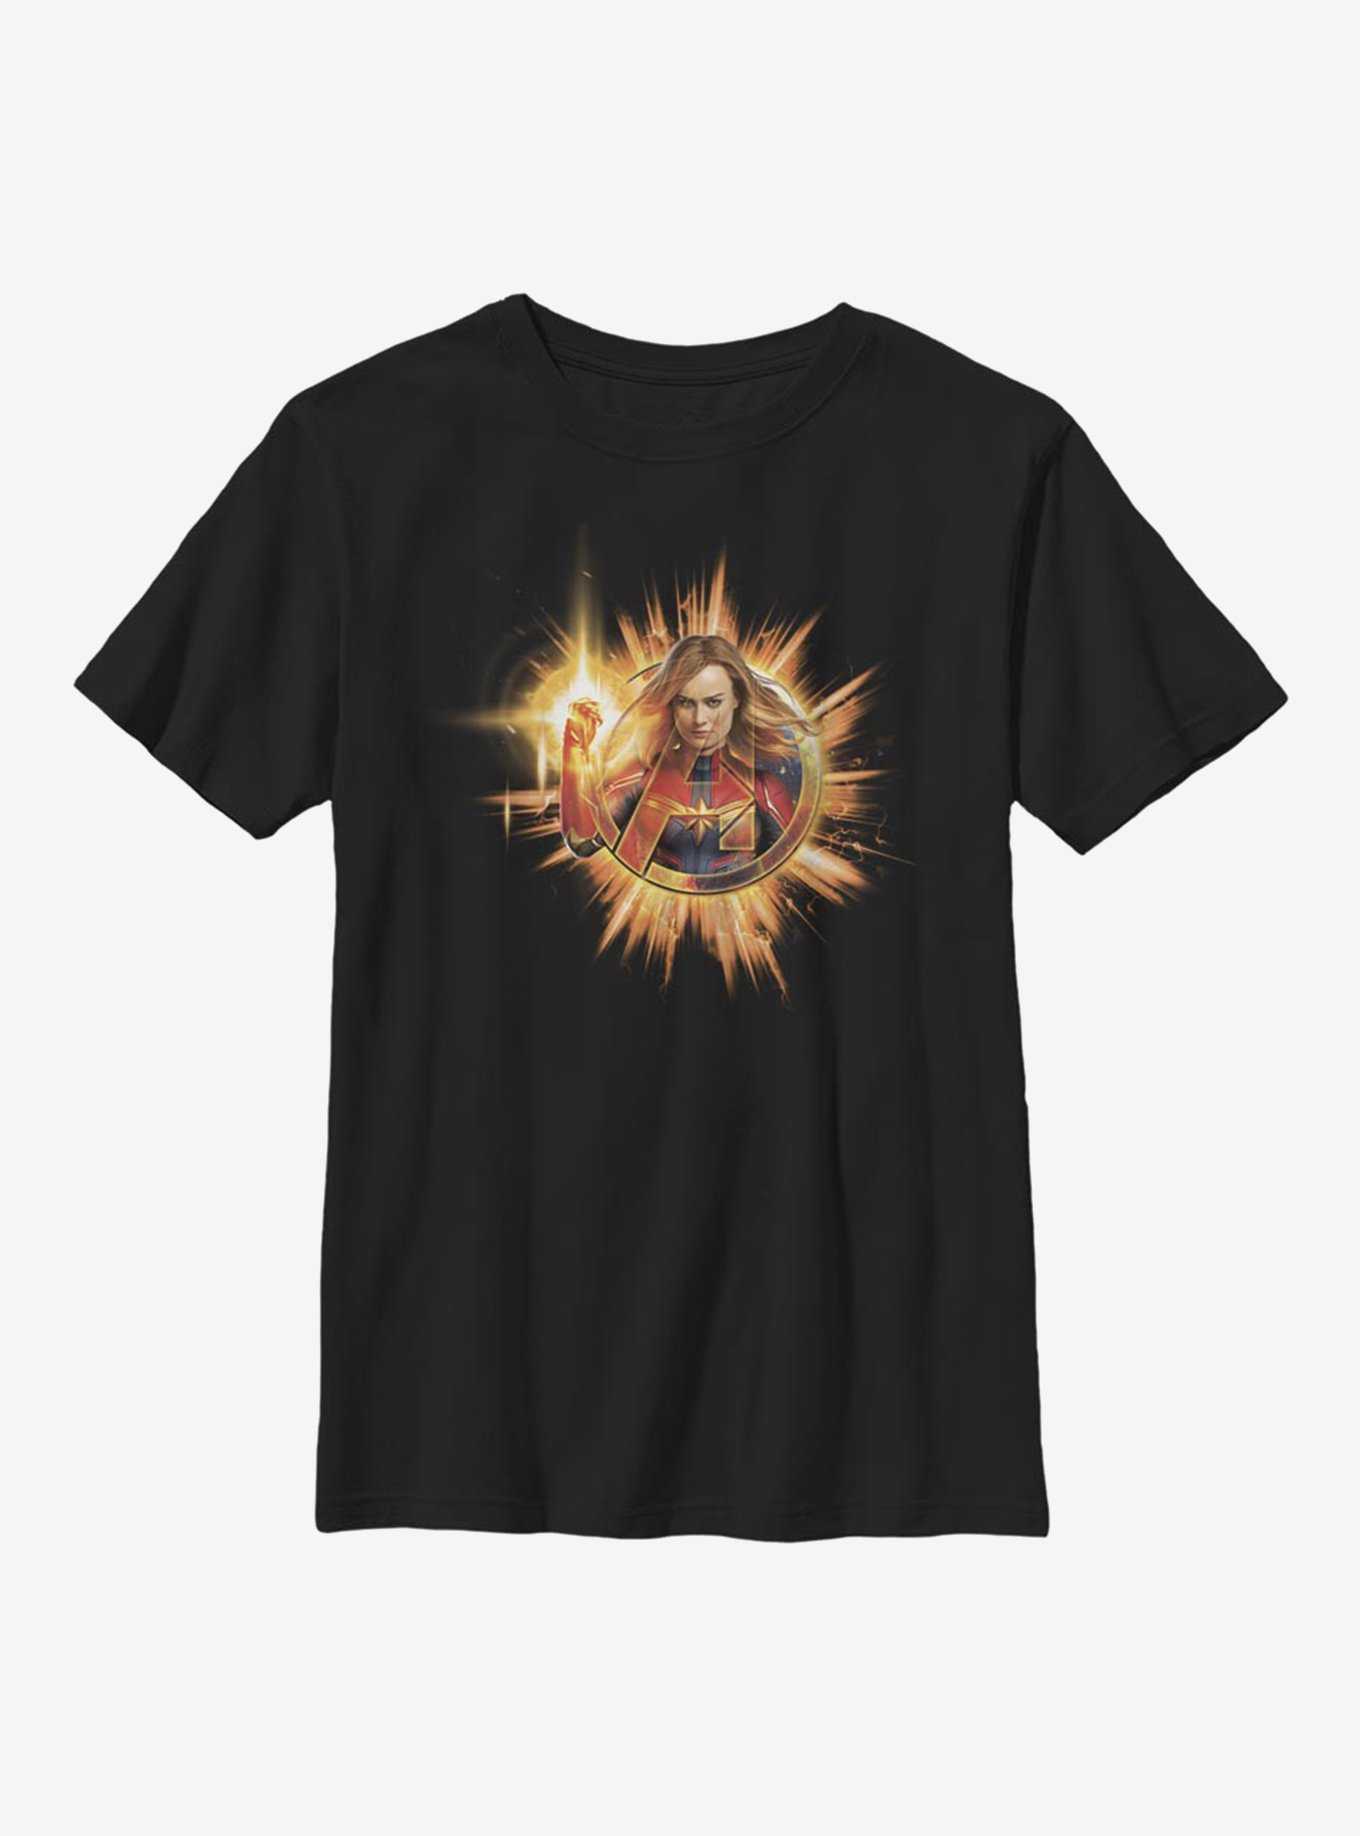 Marvel Captain Marvel Fire Youth T-Shirt, , hi-res